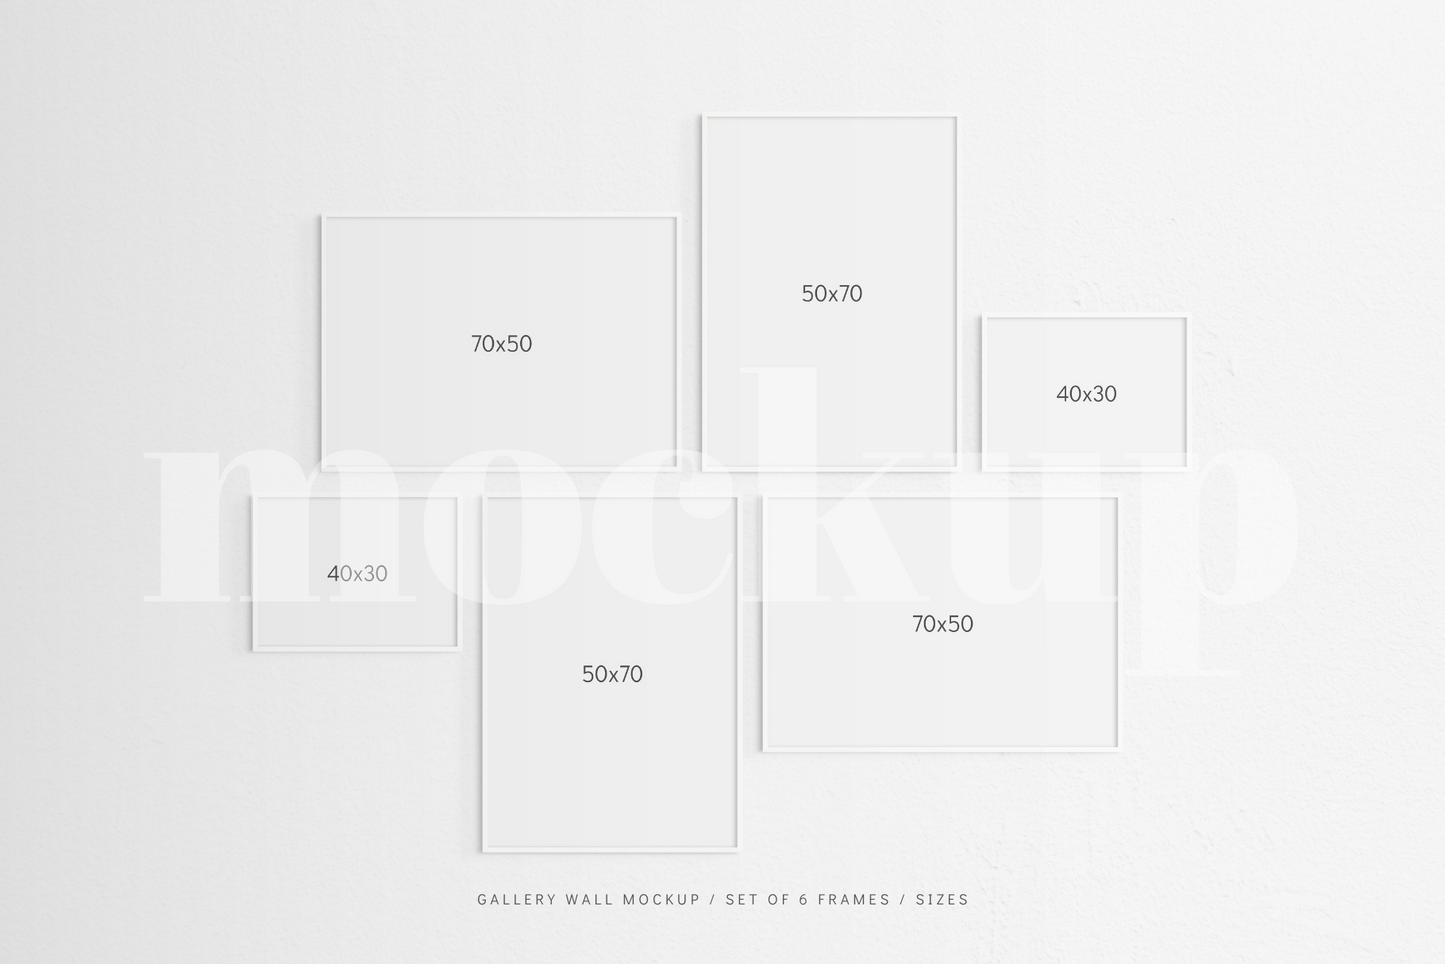 Gallery Wall Mockup | Set of 6 Frames | Frame Mockup | White | PSD